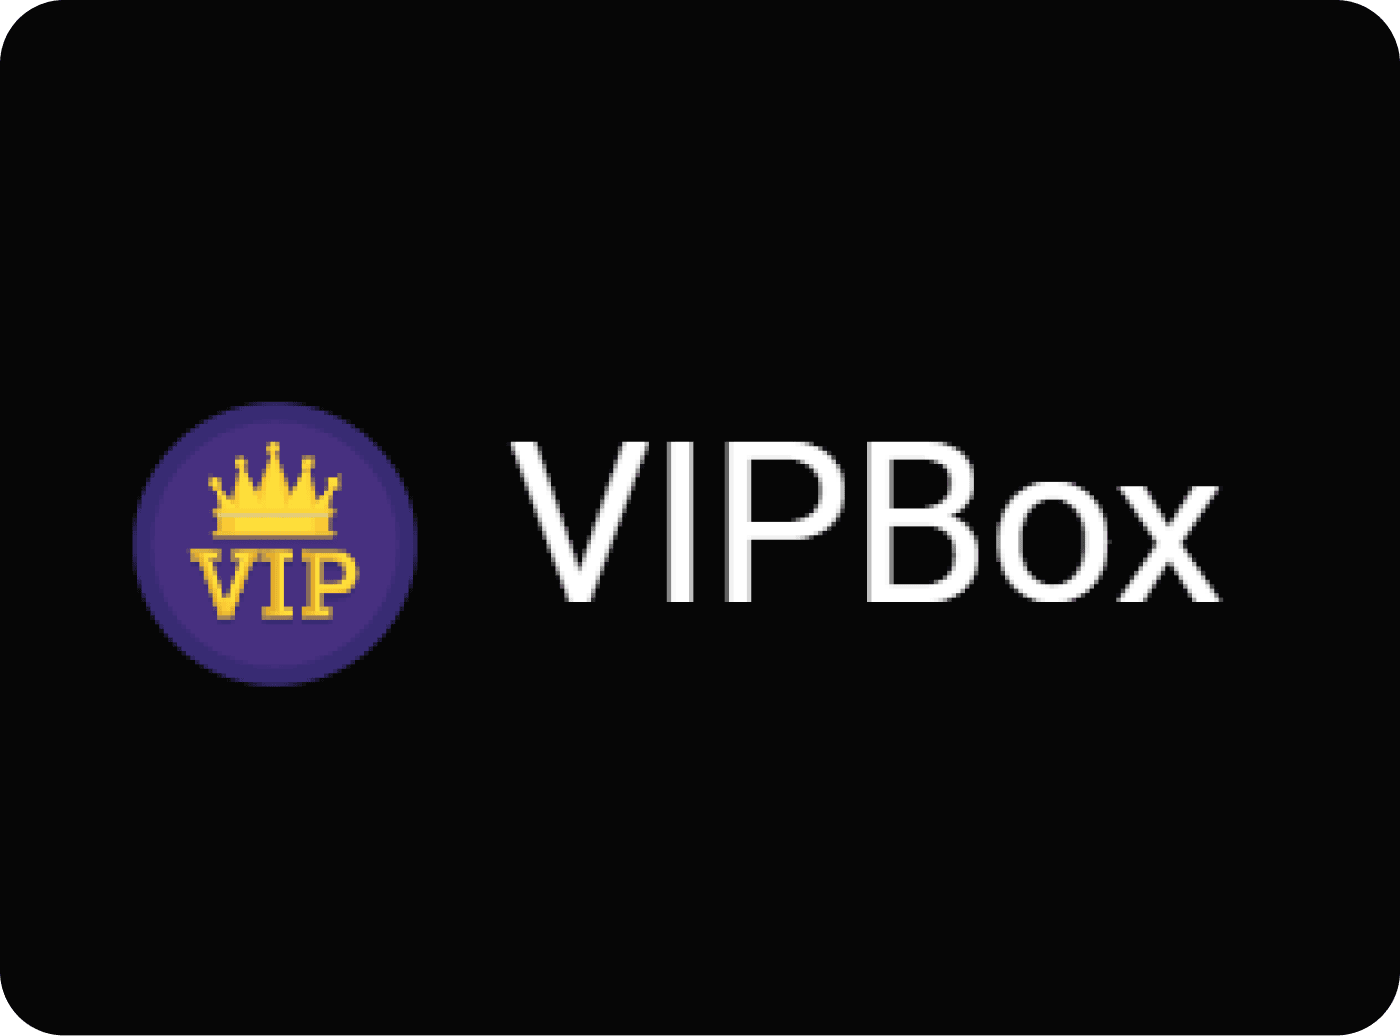 VIP Box